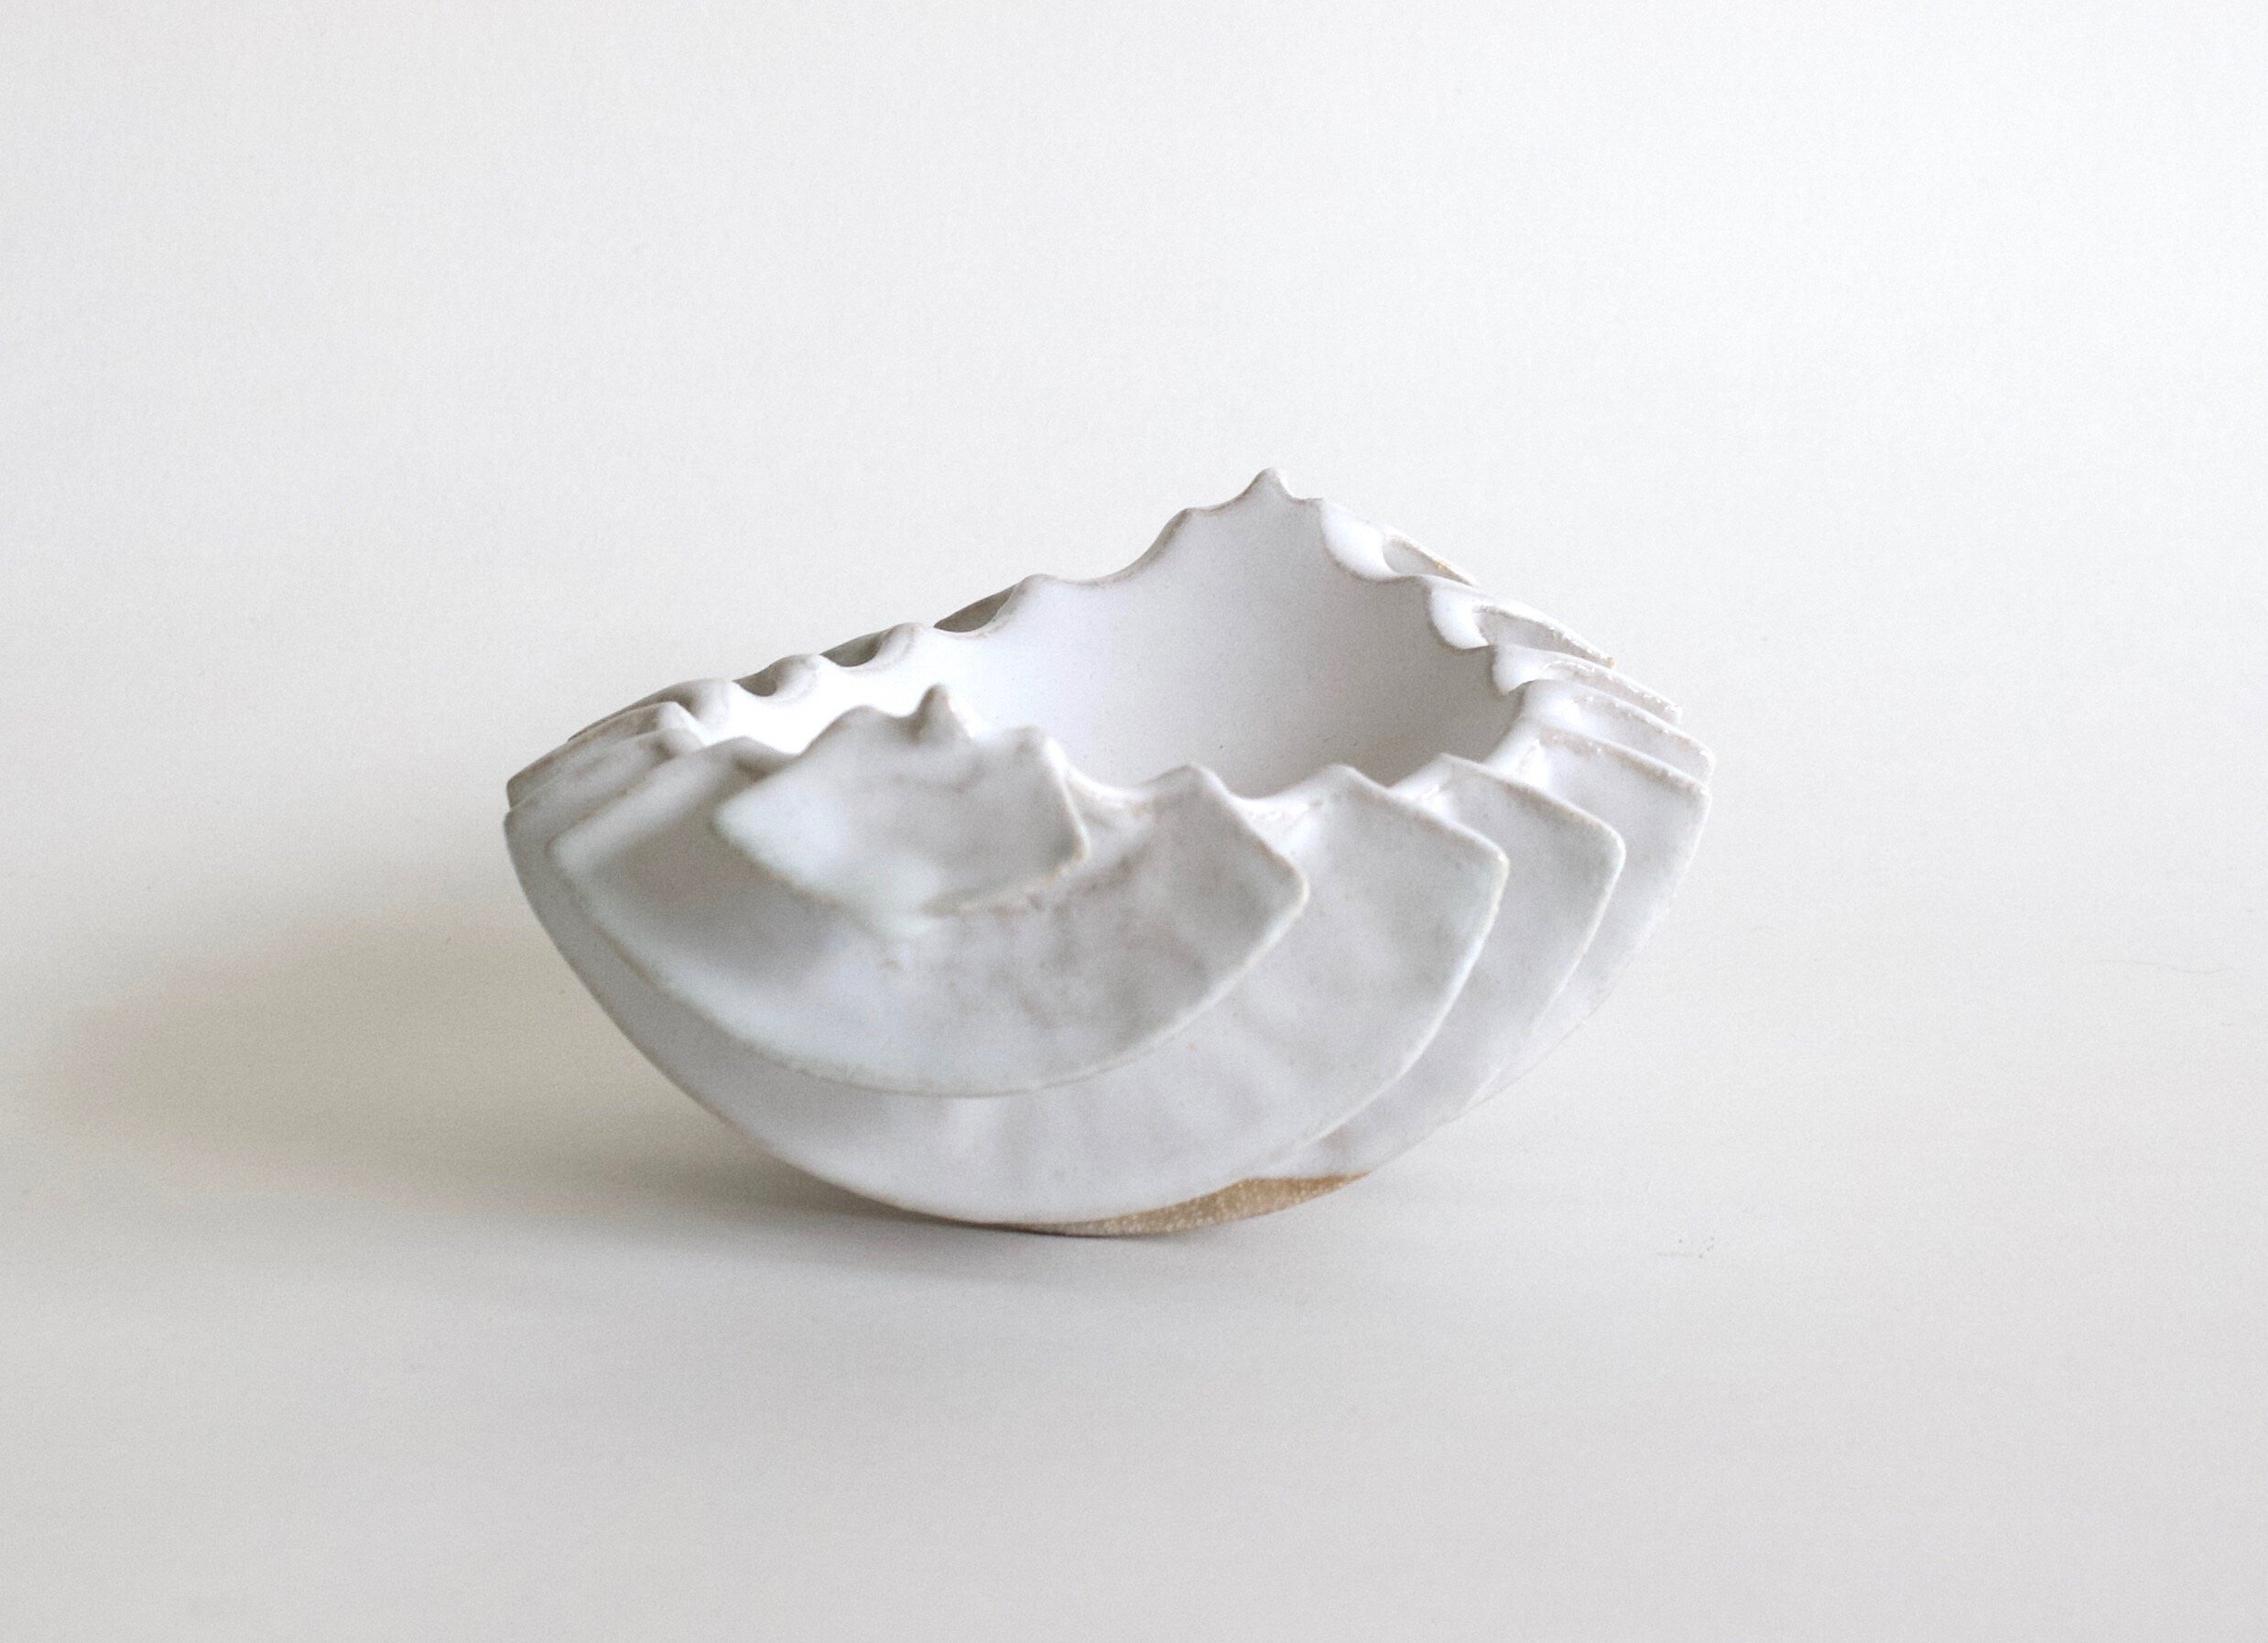  Finned boat-shaped form  16 x 13.5 x 7.5 cm  Ceramic 